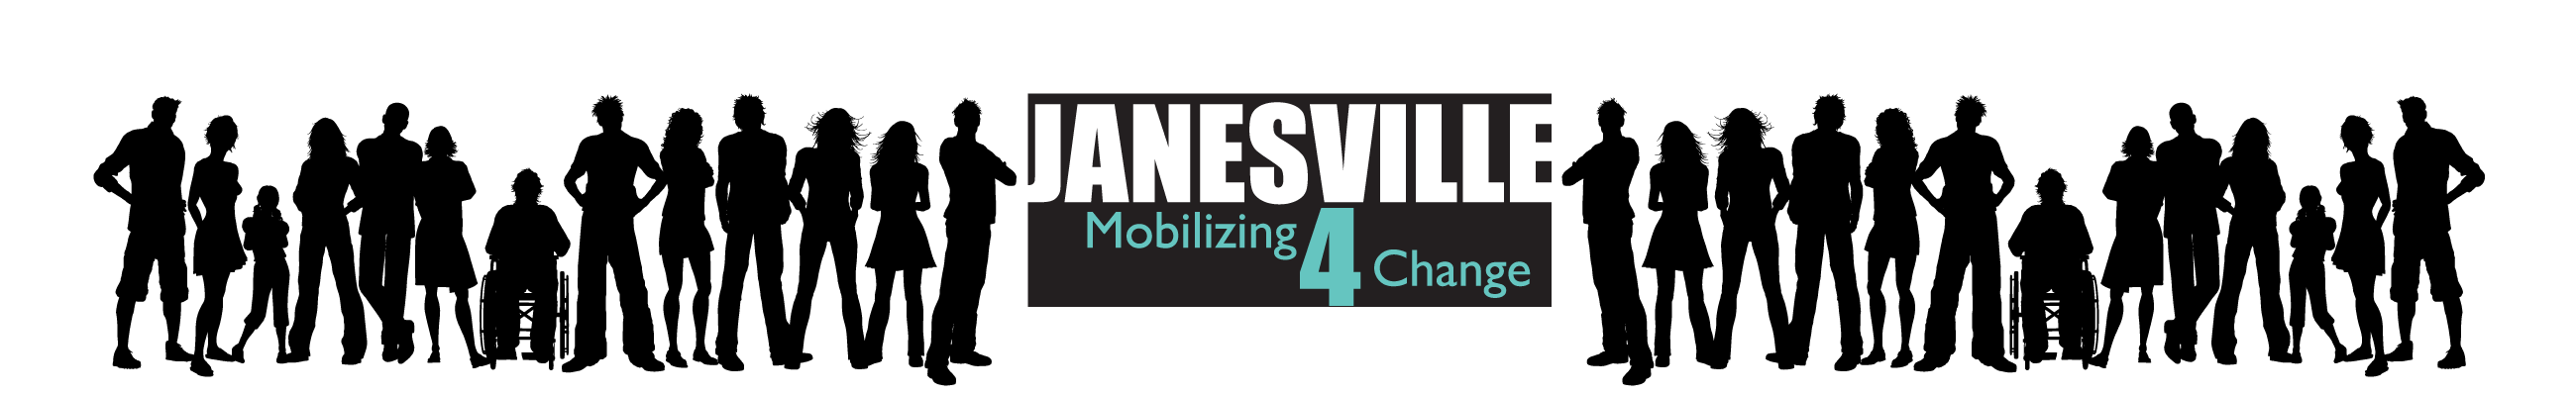 janesville-mobilizing-4-change-2